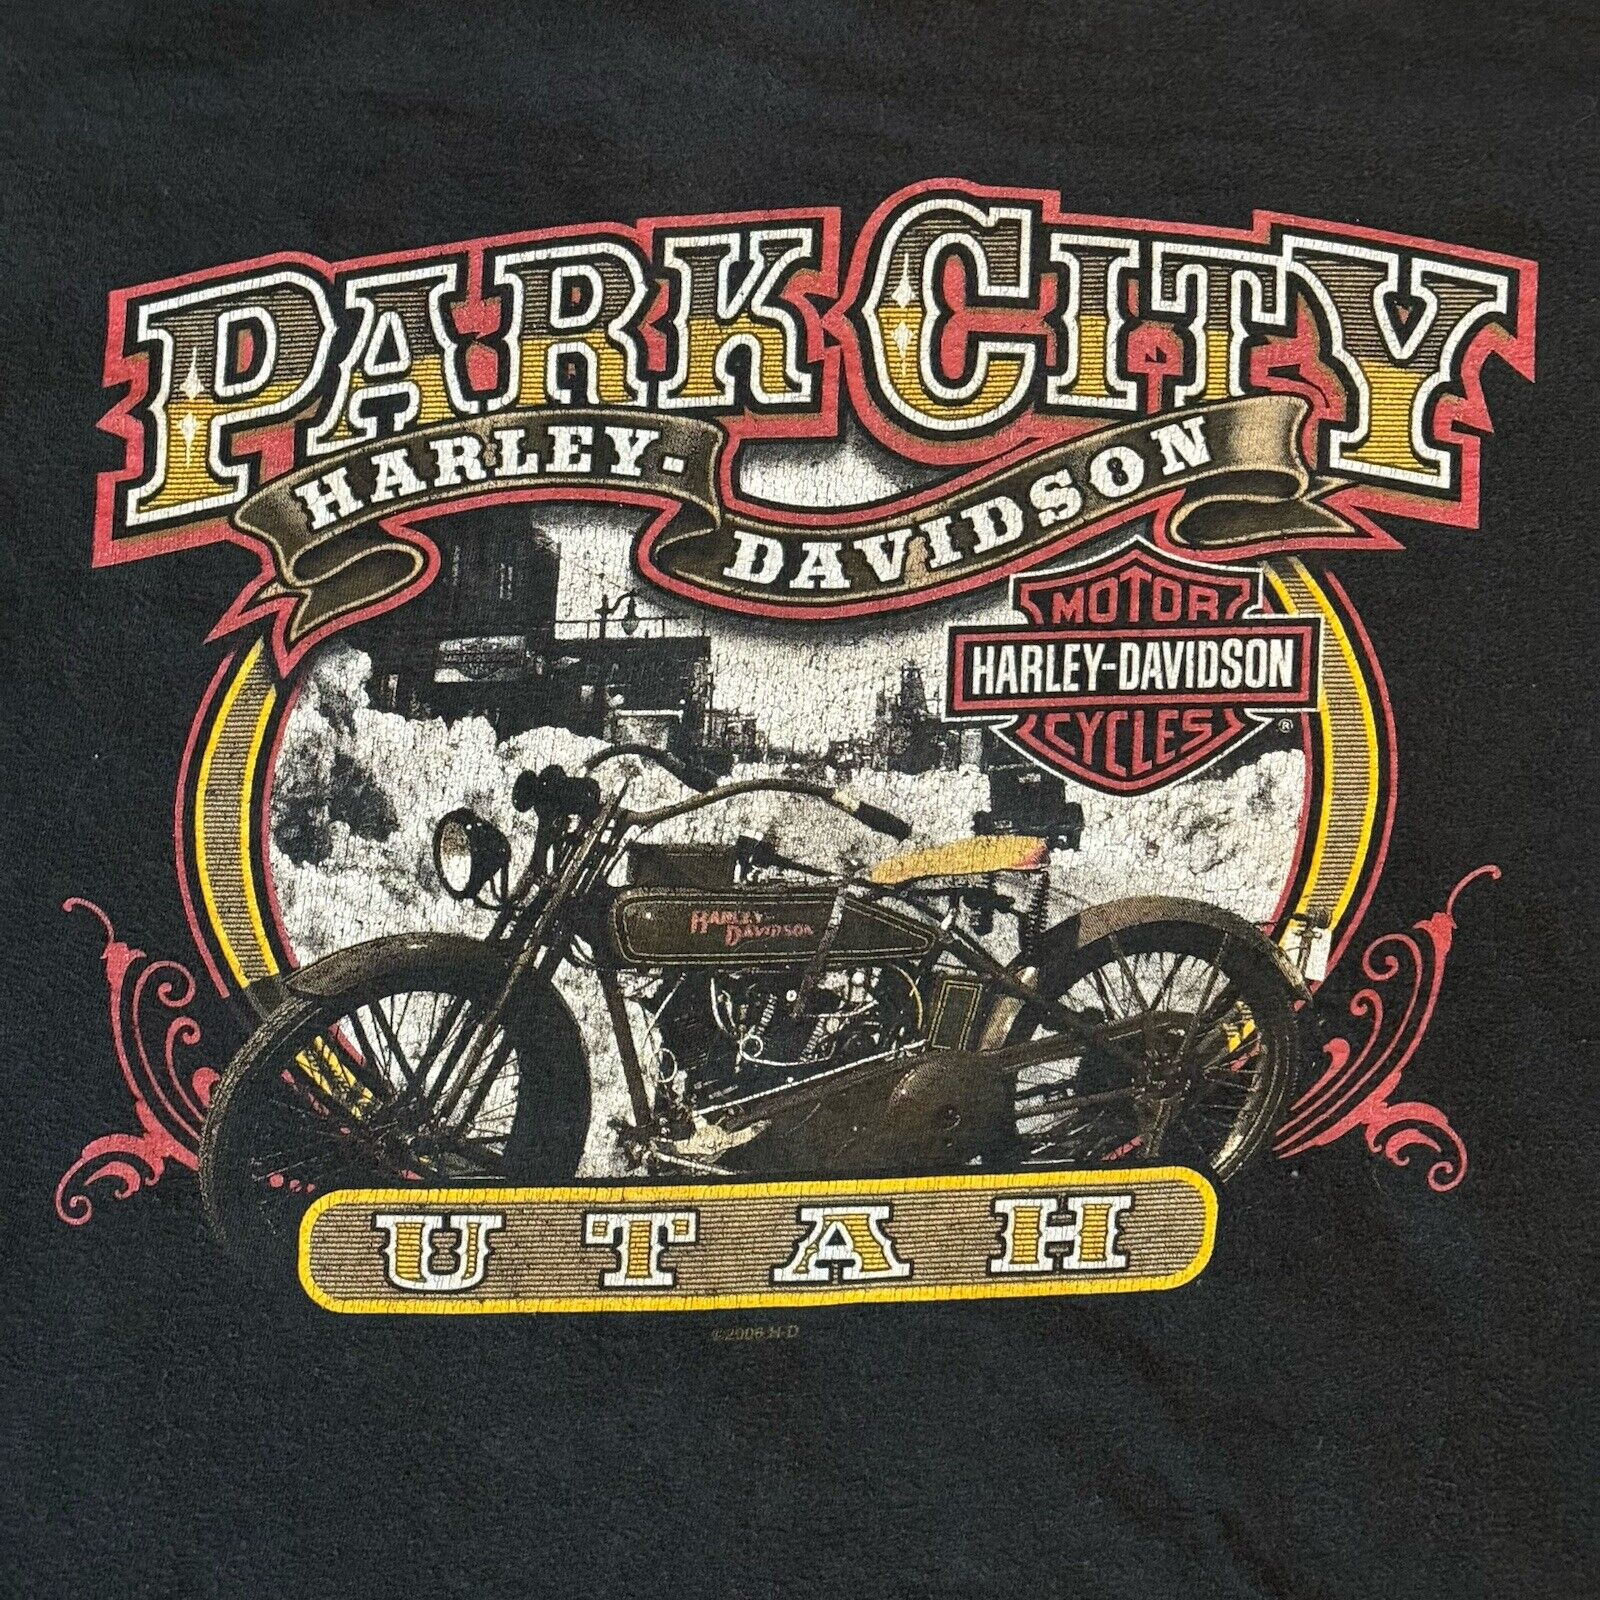 Harley Davidson T Shirt Size XL Long Sleeve Black Graphic Park City Utah HD 2006